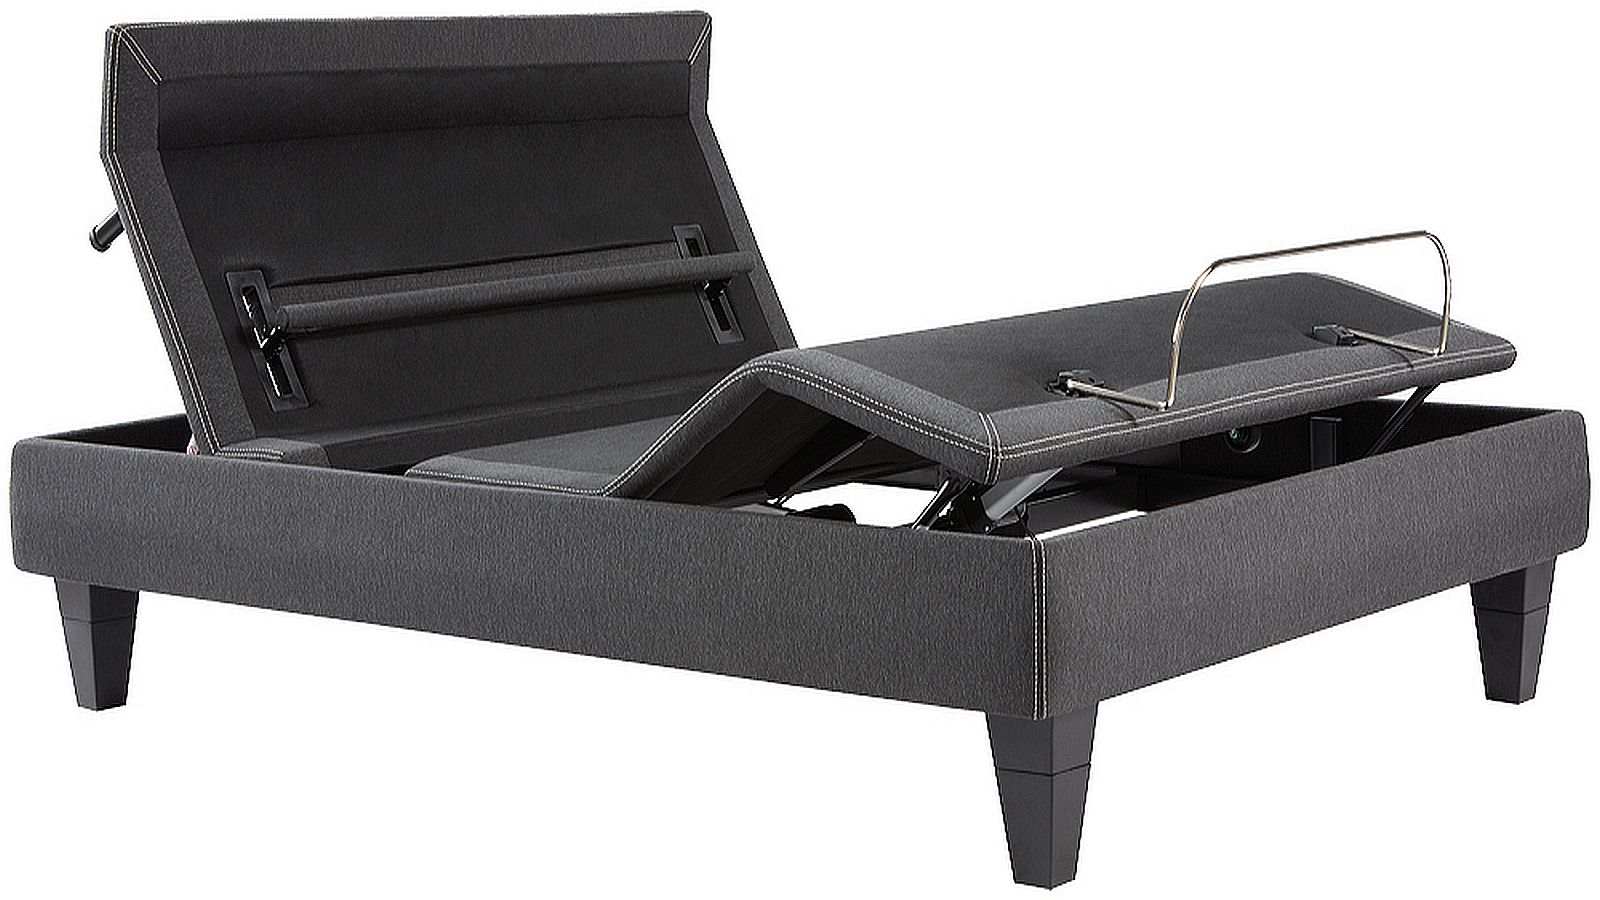 Beautyrest Black Luxury Adjustable Base Twin XL